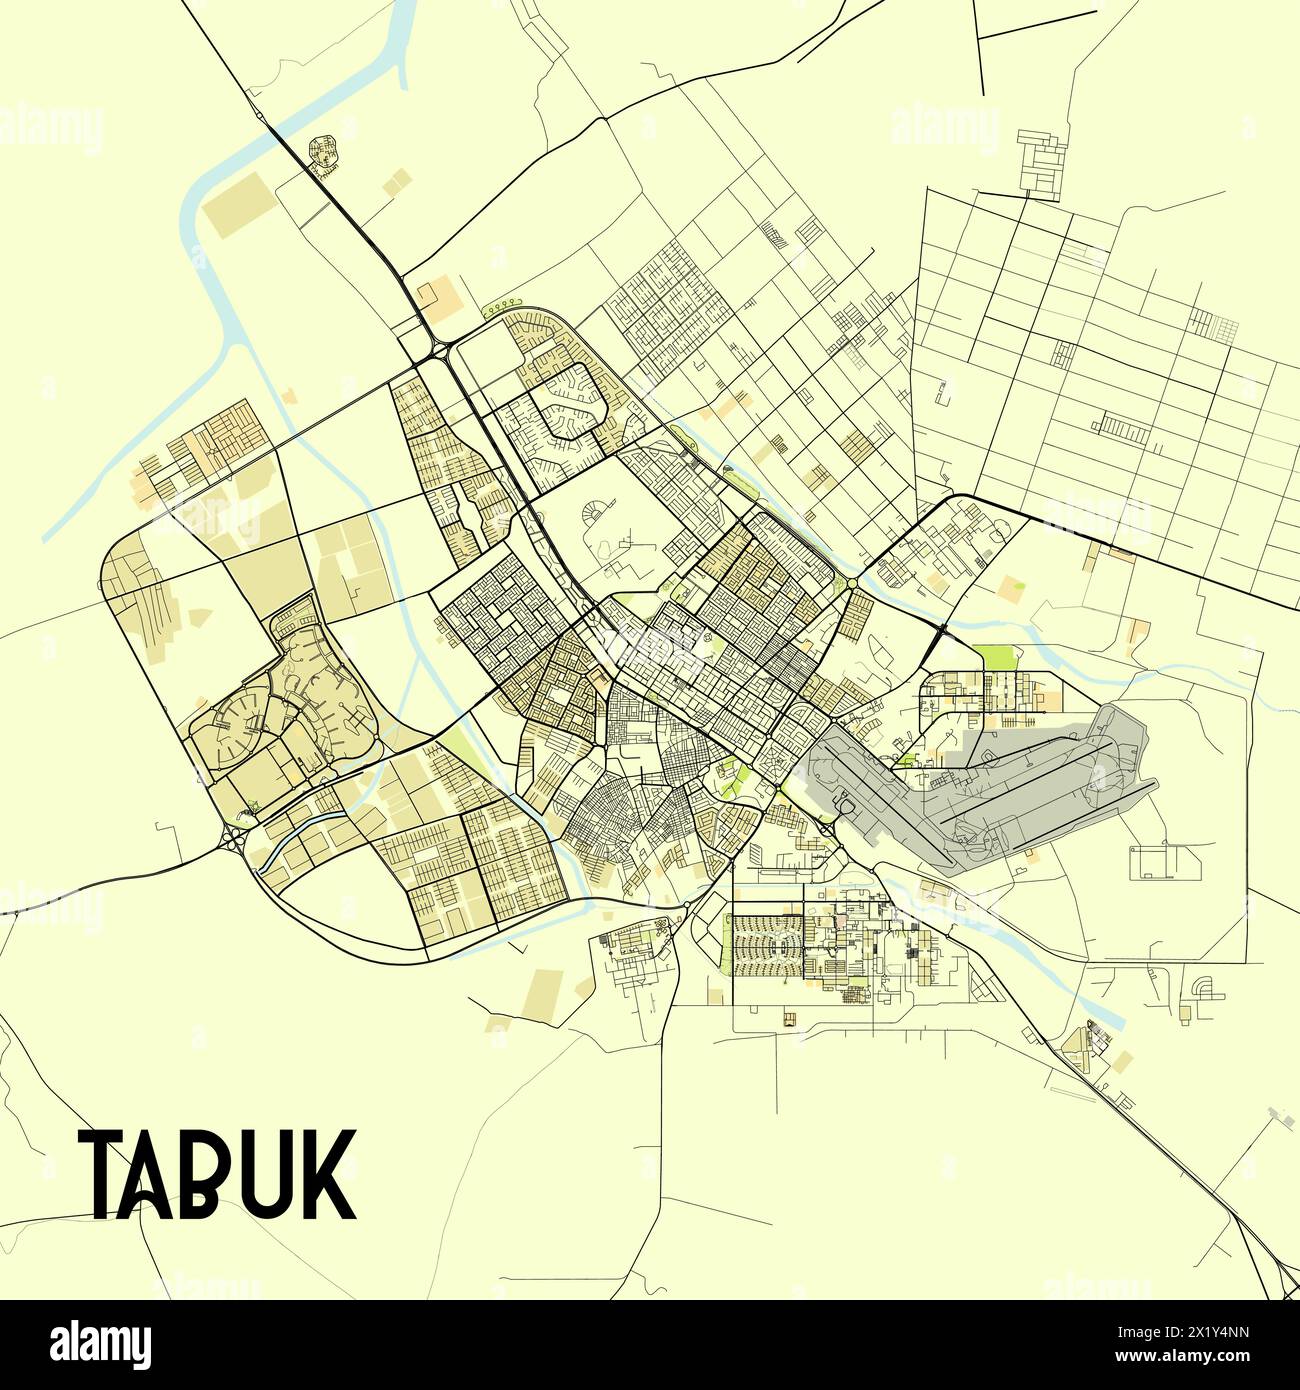 Tabuk, Saudi Arabia vector city map Stock Vector